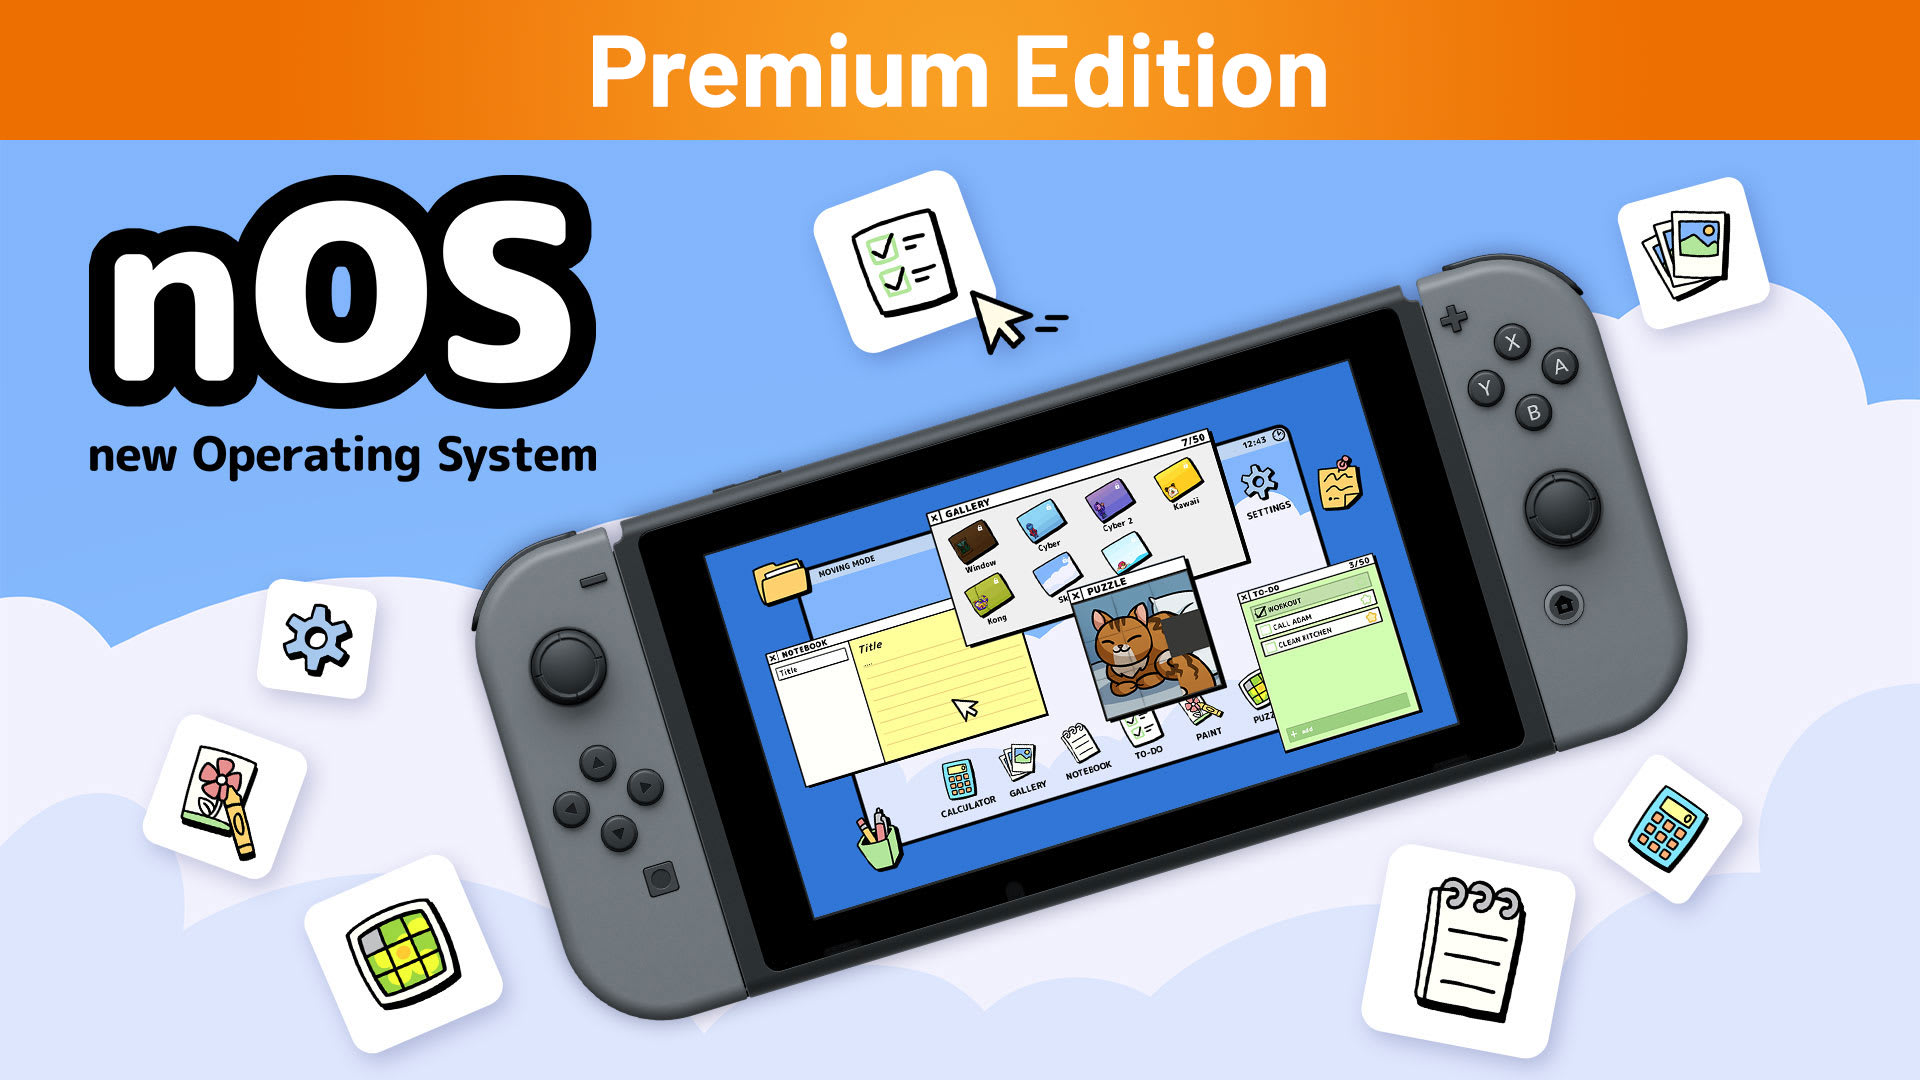 nOS new Operating System Premium Edition